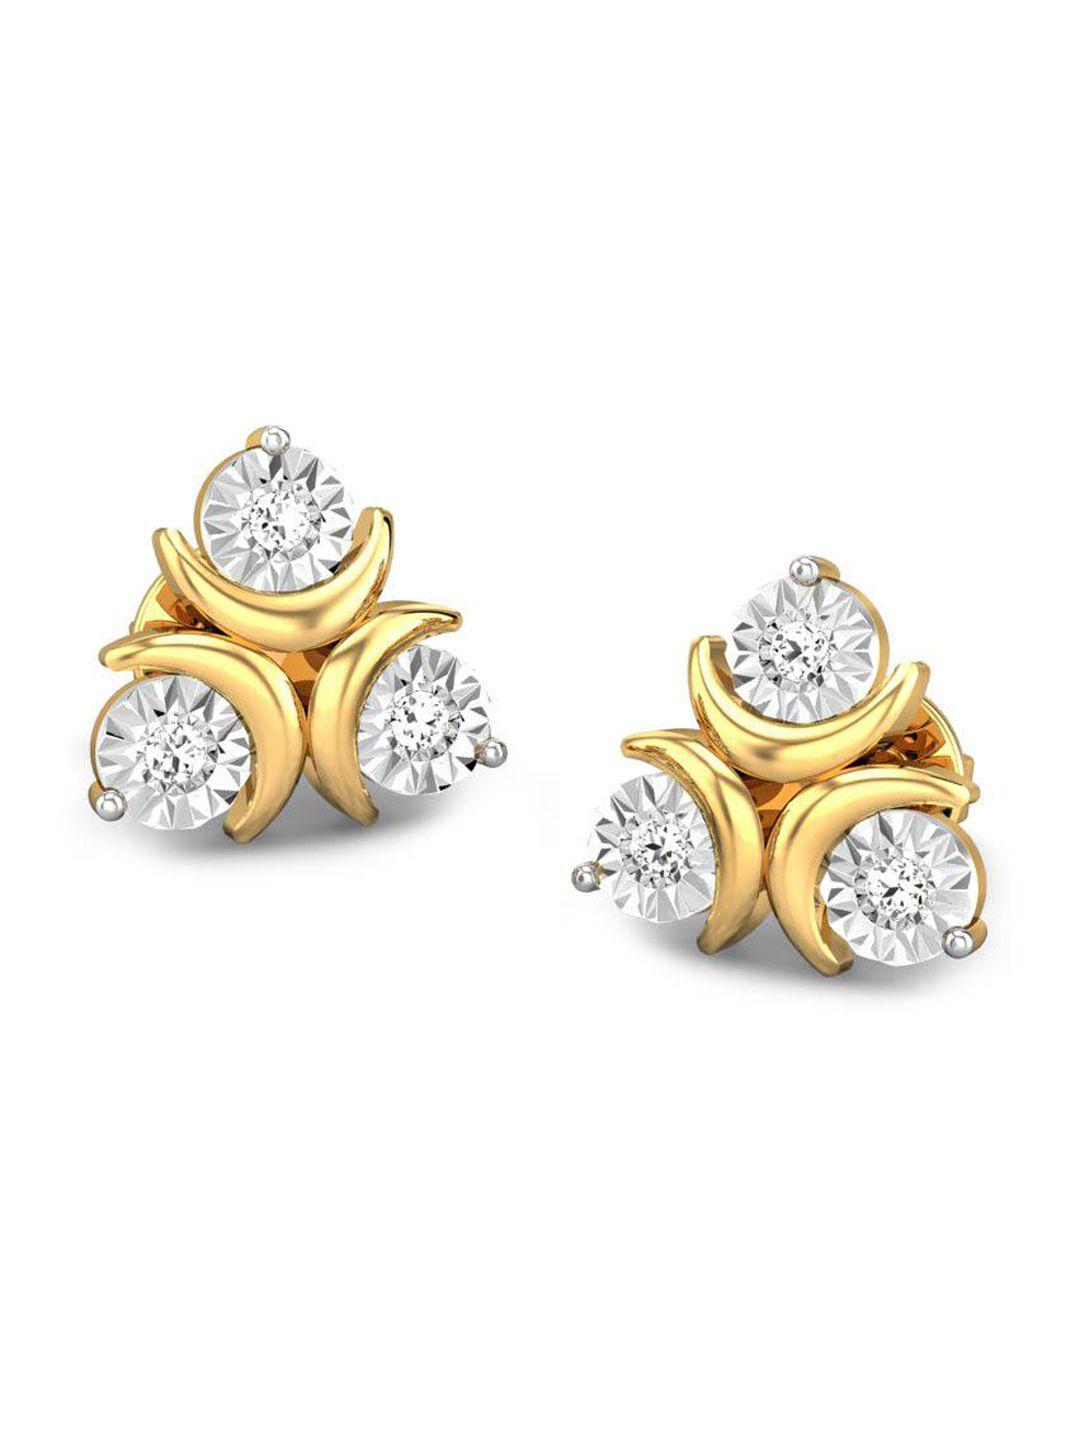 candere a kalyan jewellers company 18kt gold diamond stud earrings-1.89gm